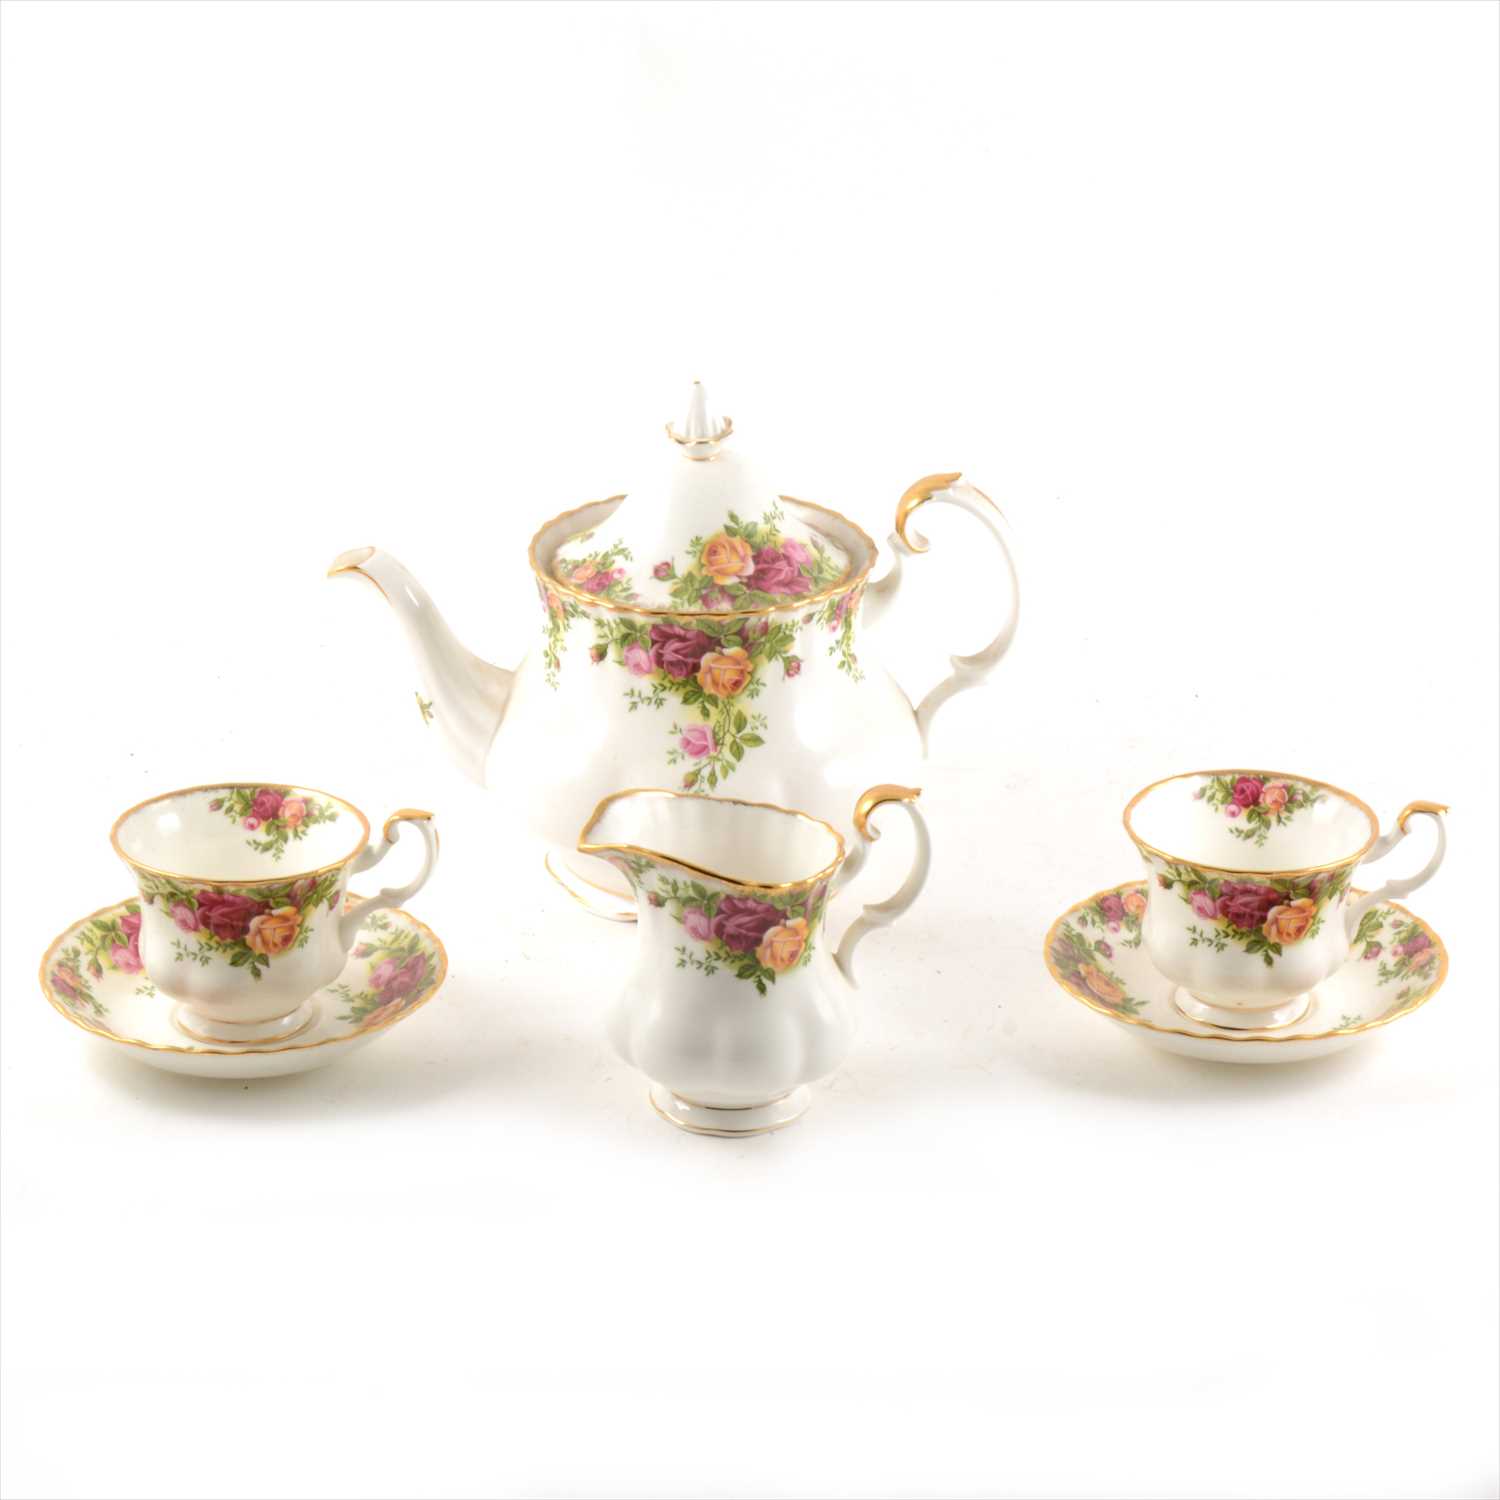 Lot 51 - Royal Albert bone china tea service, Old Country Roses pattern.